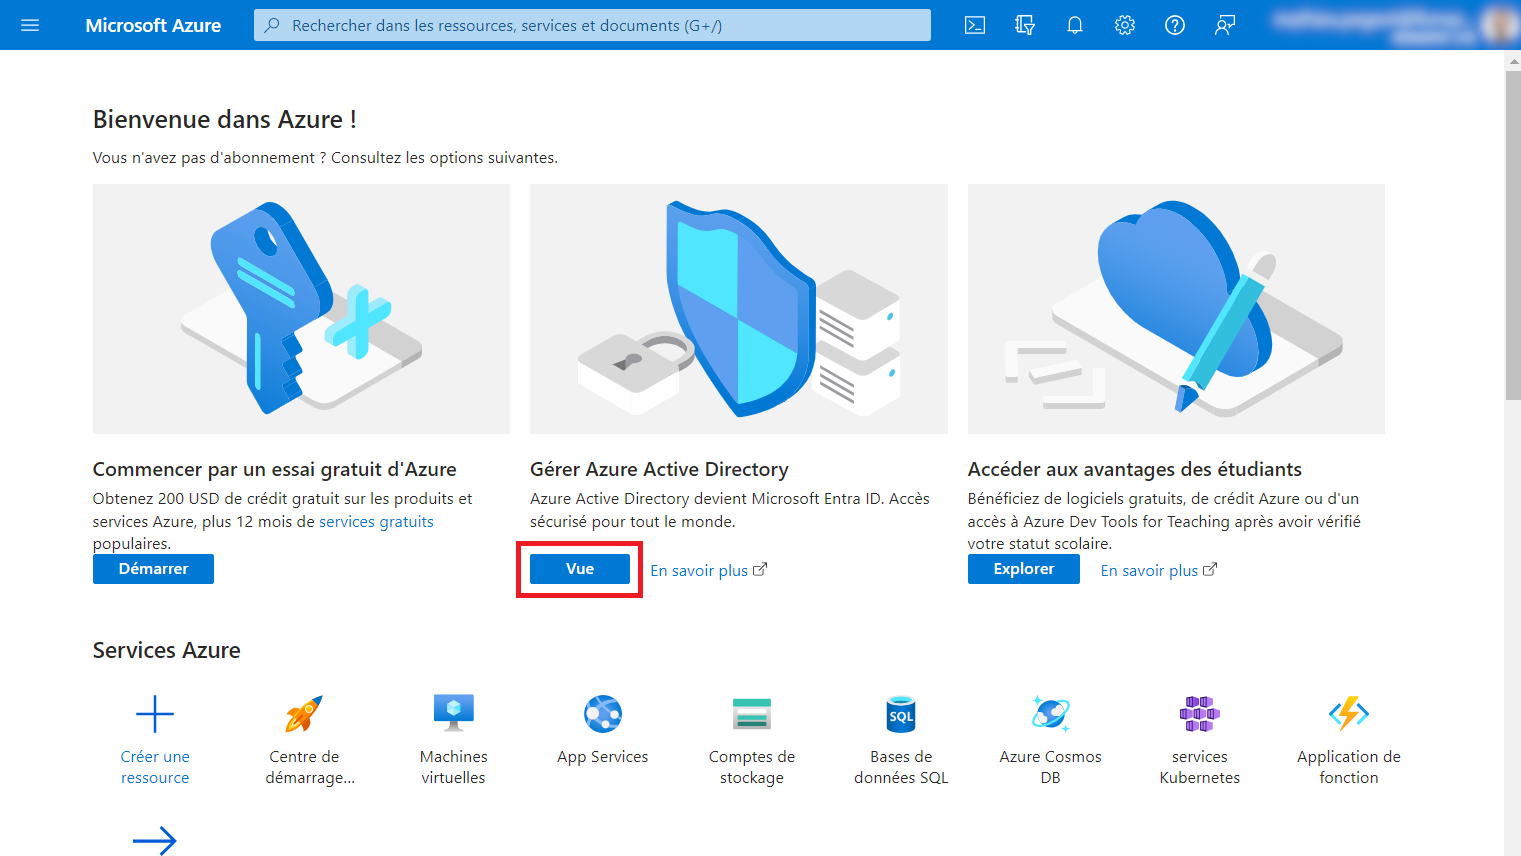 Azure AD - Gérer Azure Active Directory